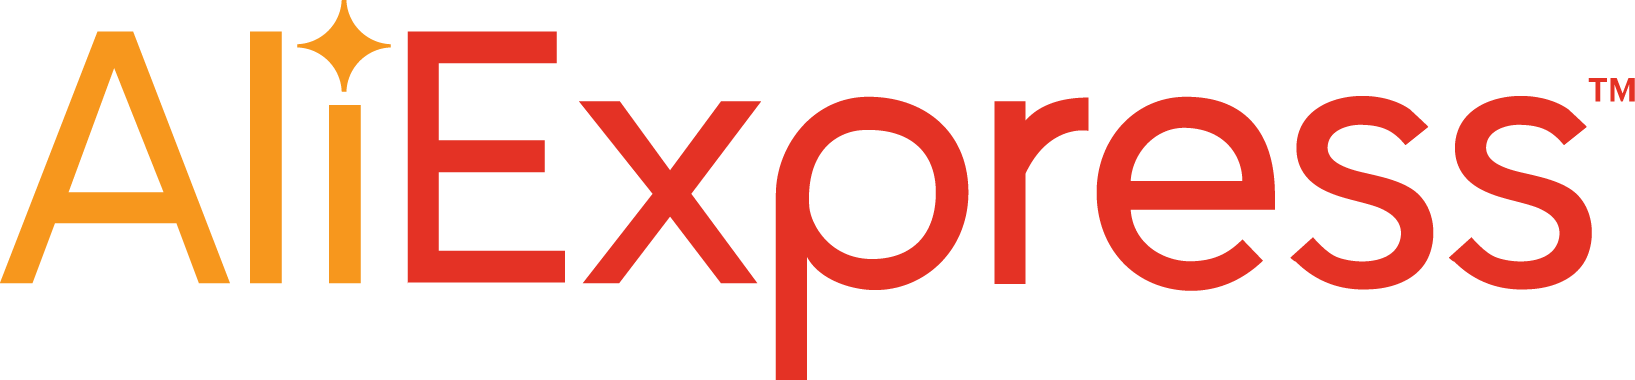 Aliexpress Logo png